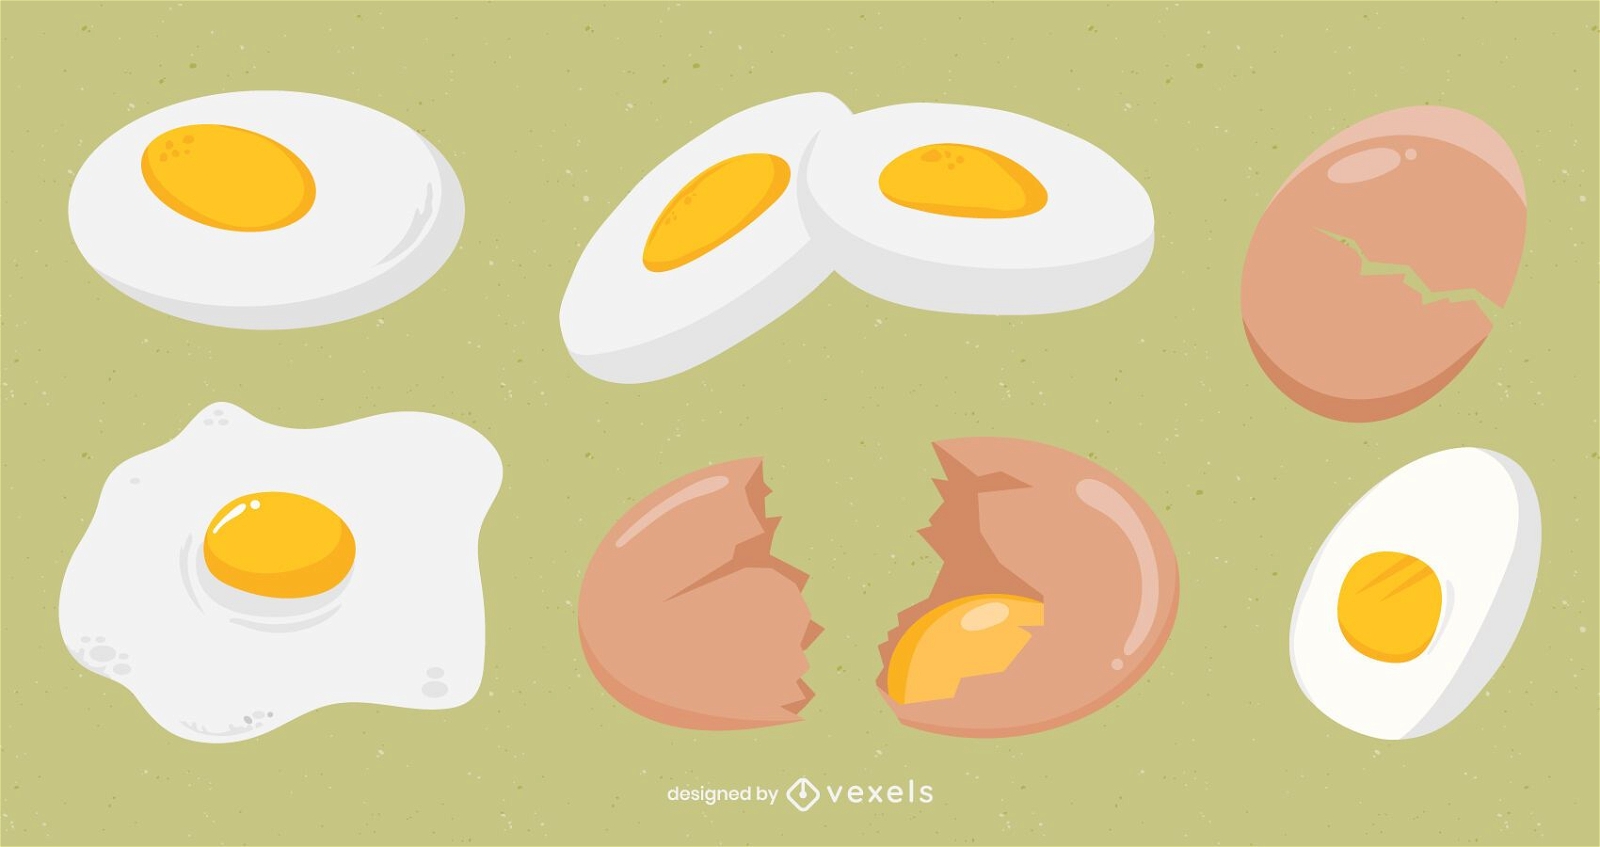 Flat Egg Design Pack